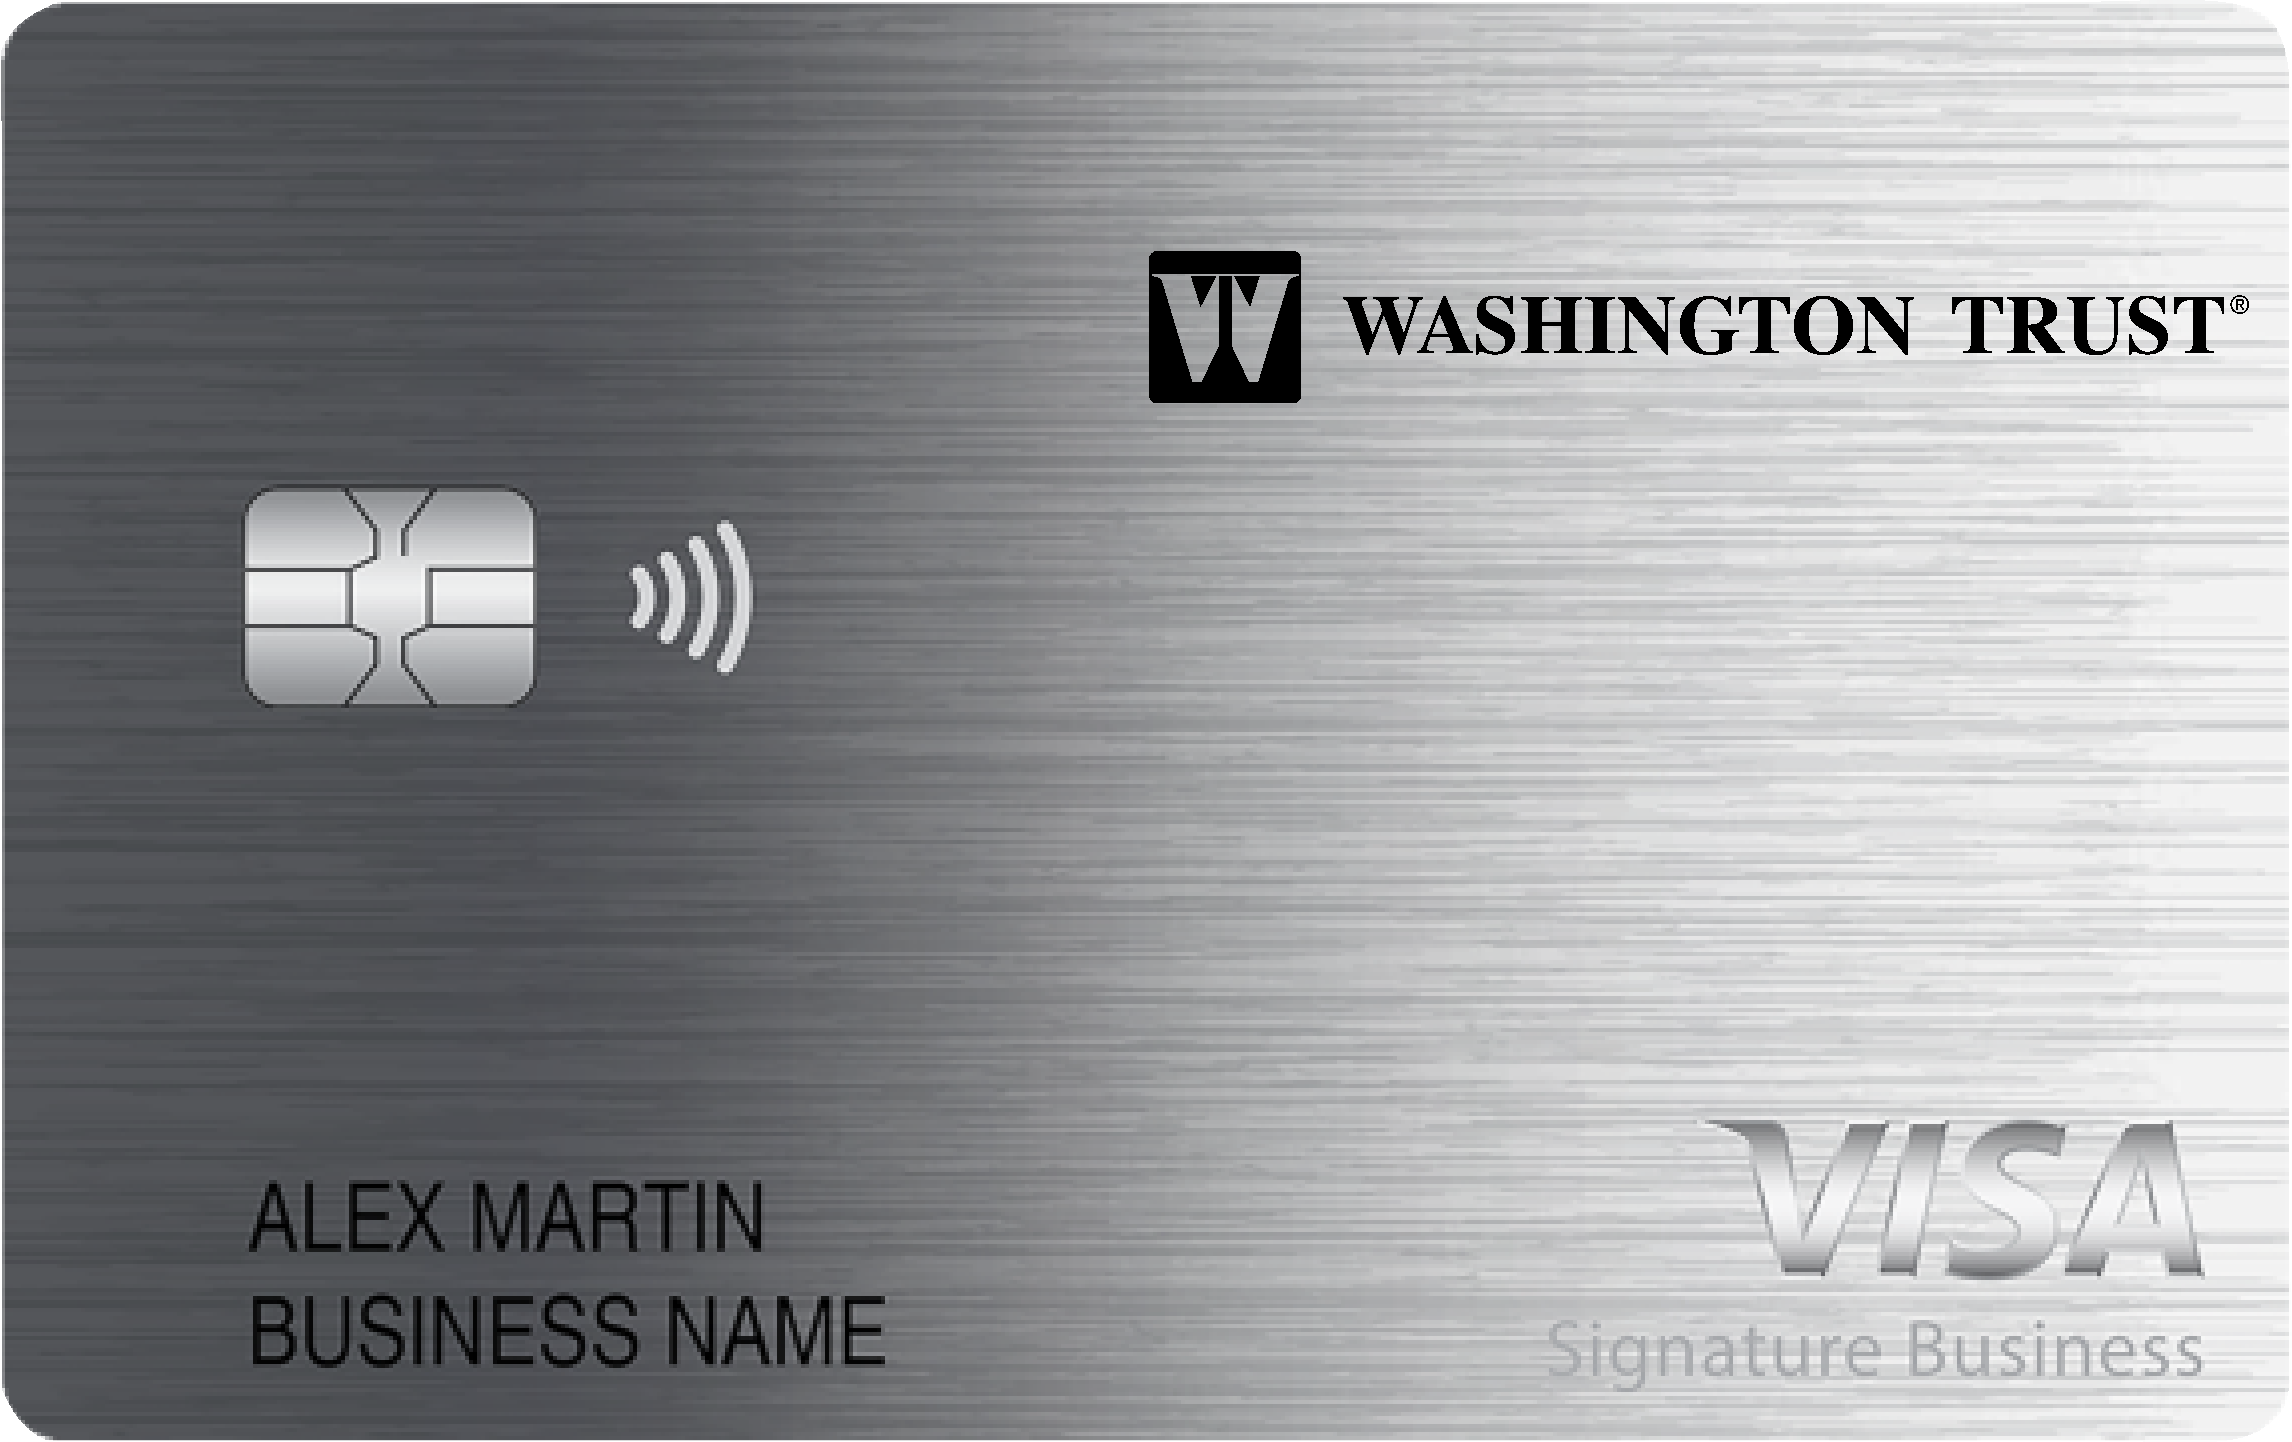 Washington Trust Smart Business Rewards Card